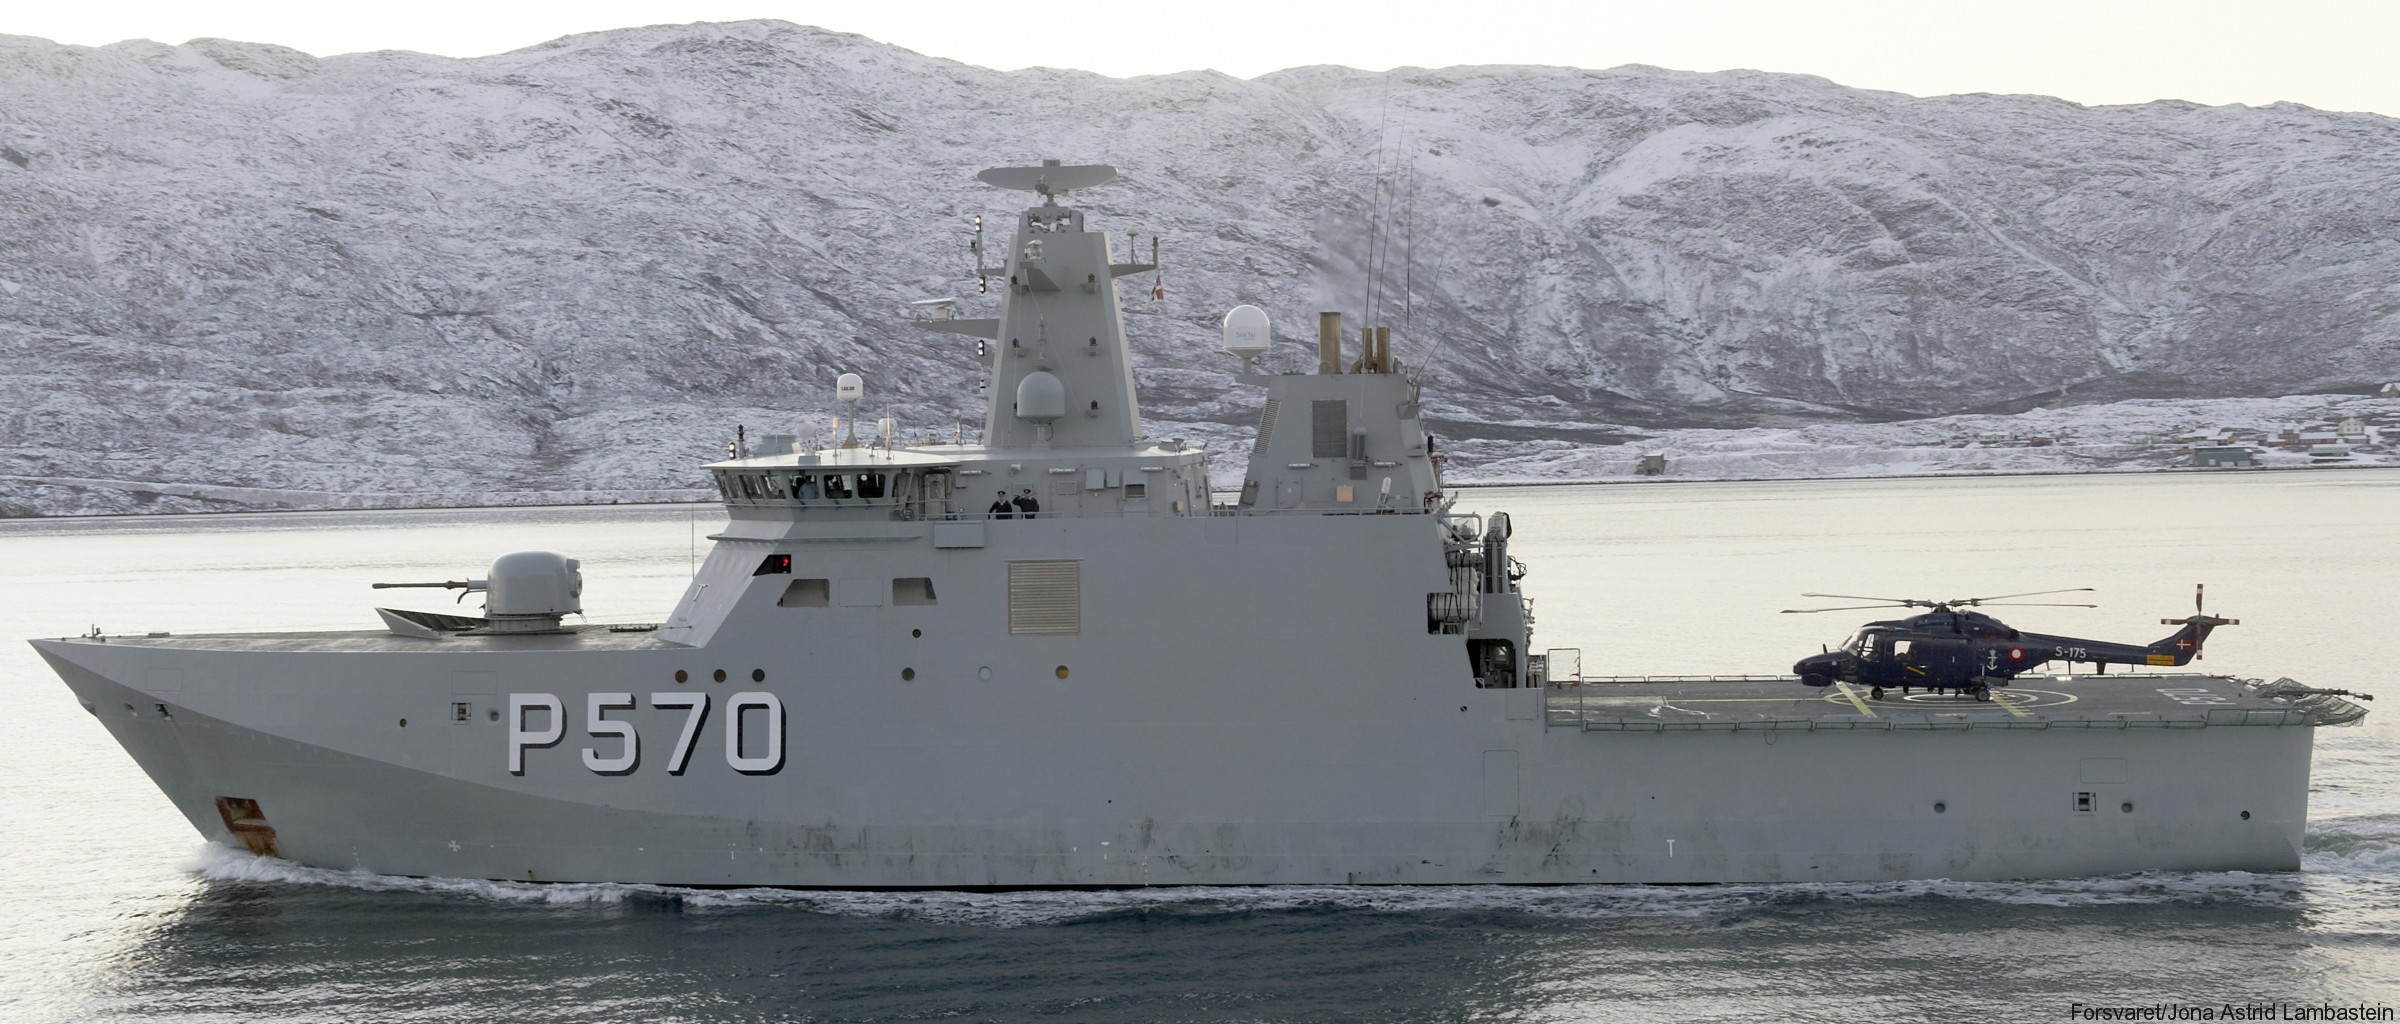 p-570 hdms knud rasmussen class offshore patrol vessel royal danish navy inspektionsfartøj 16 lynx helicopter